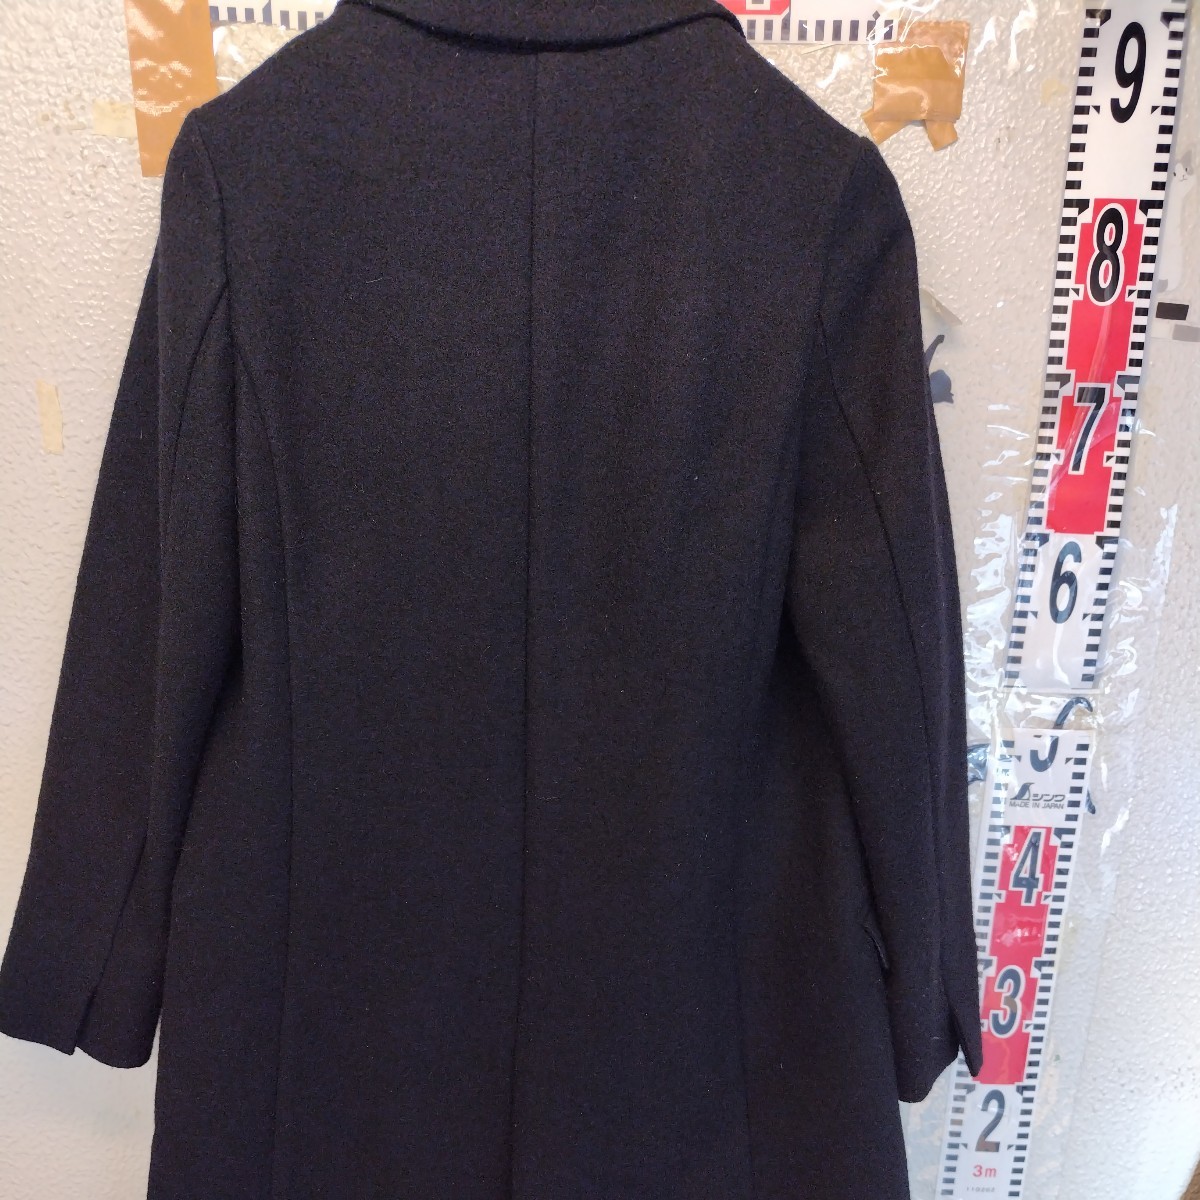  world cdec lady's M size half coat black 9|15 size dress length 90 shoulder width 38 width of a garment 43 length of a sleeve 60